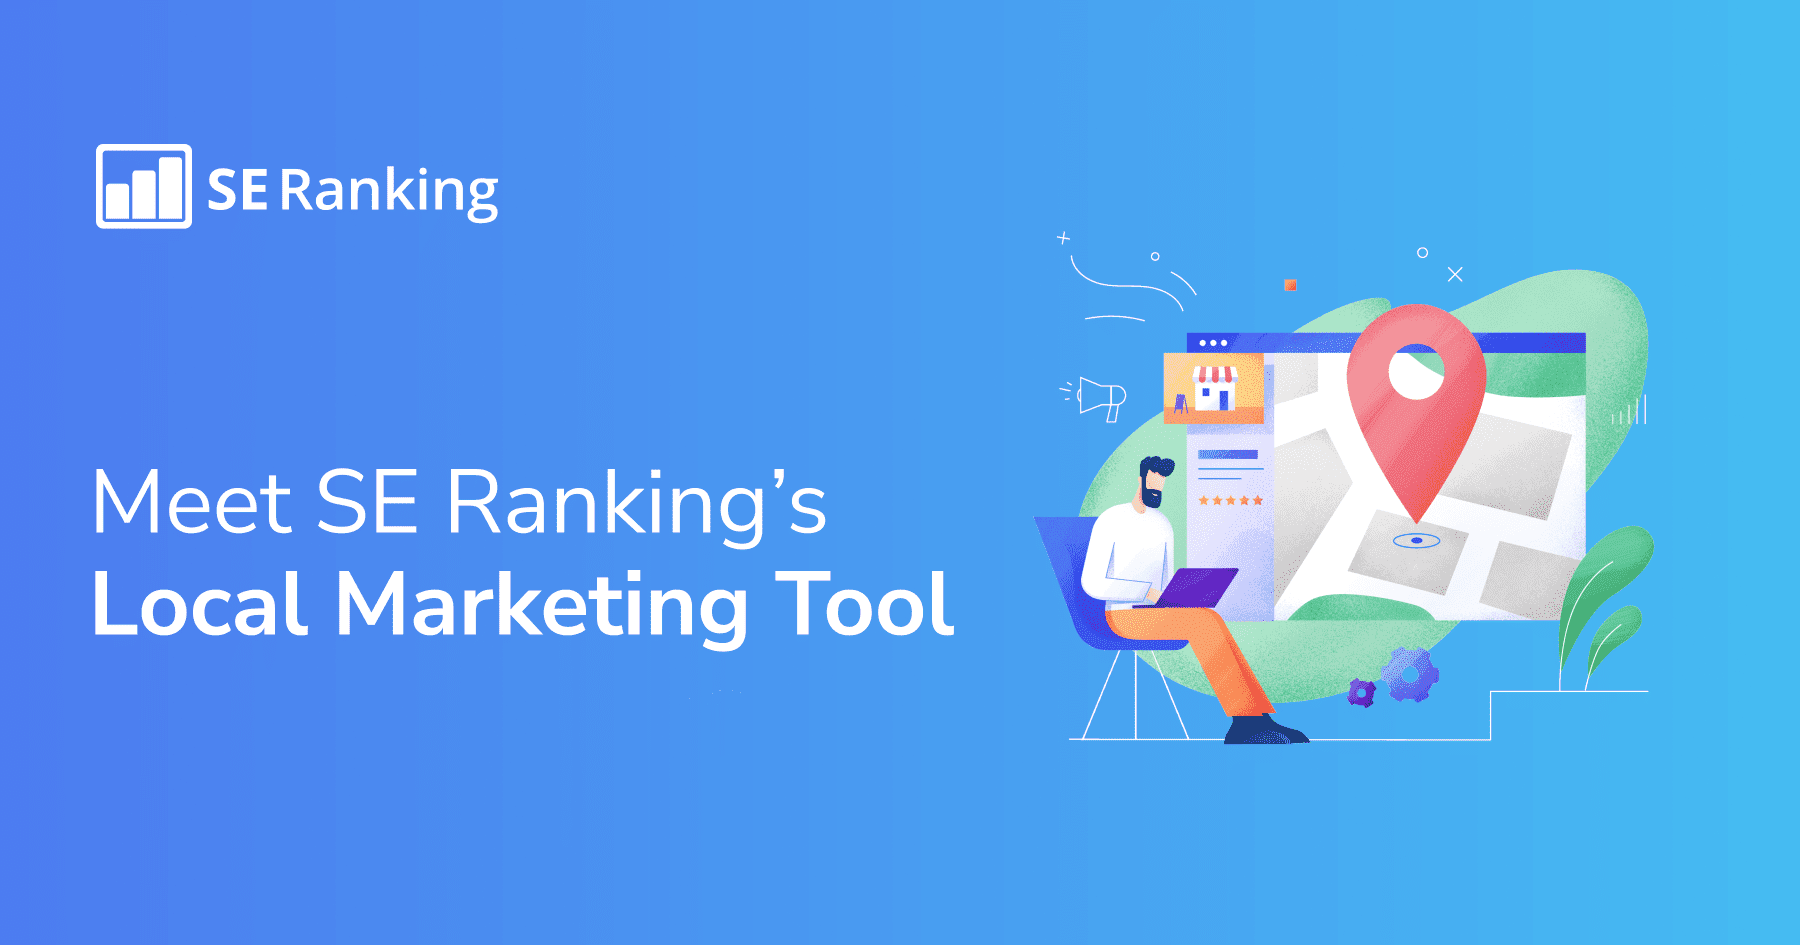 Introducing SE Ranking’s Local Marketing Tool